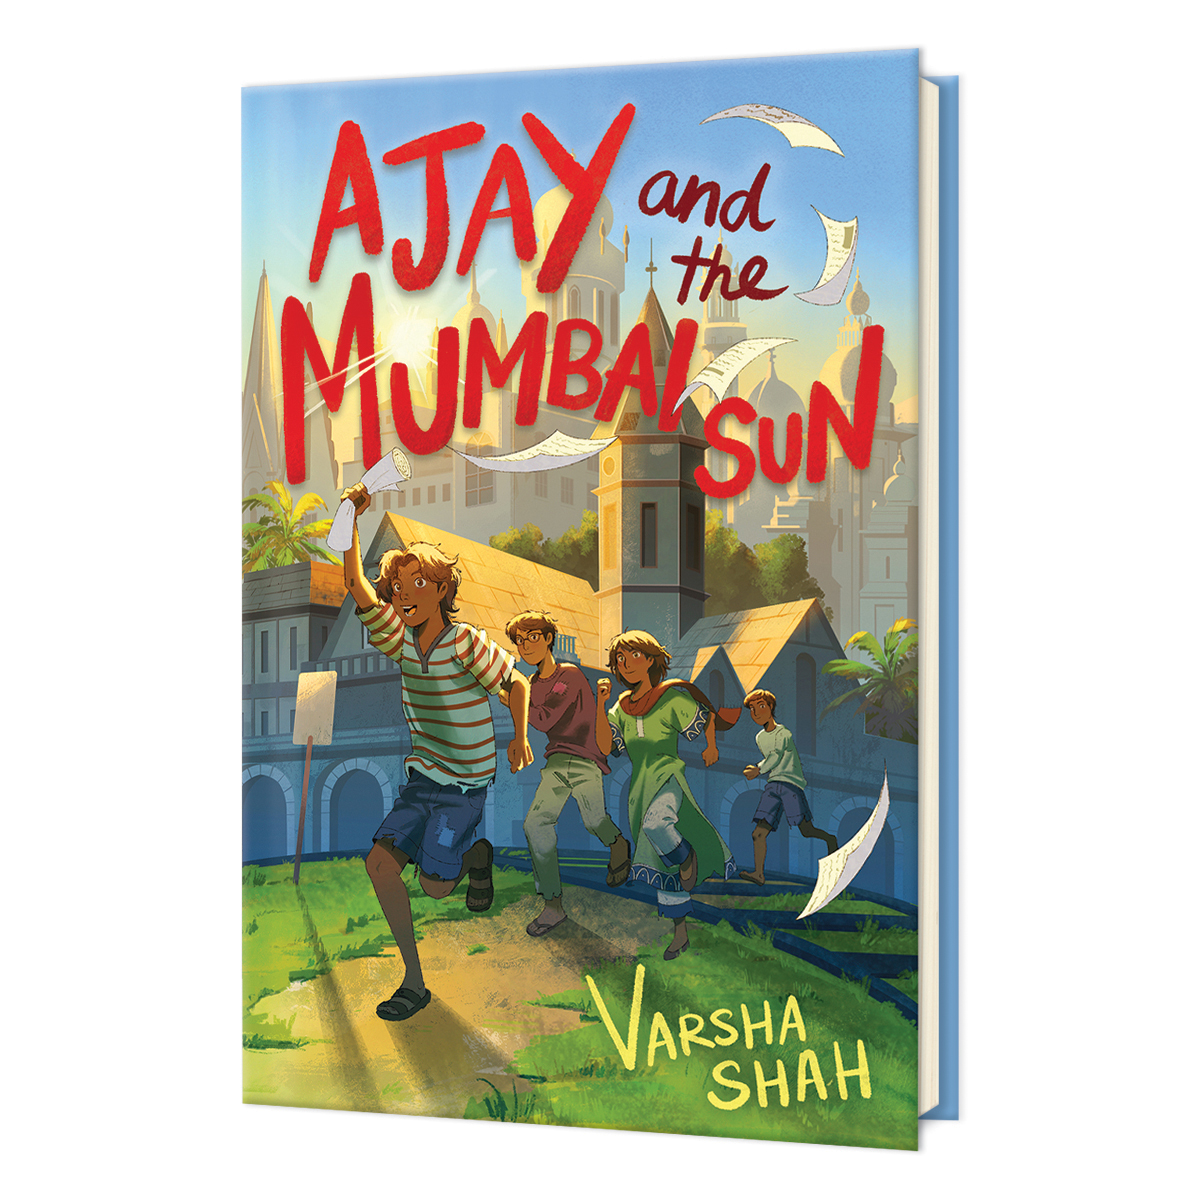  Ajay and the Mumbai Sun 